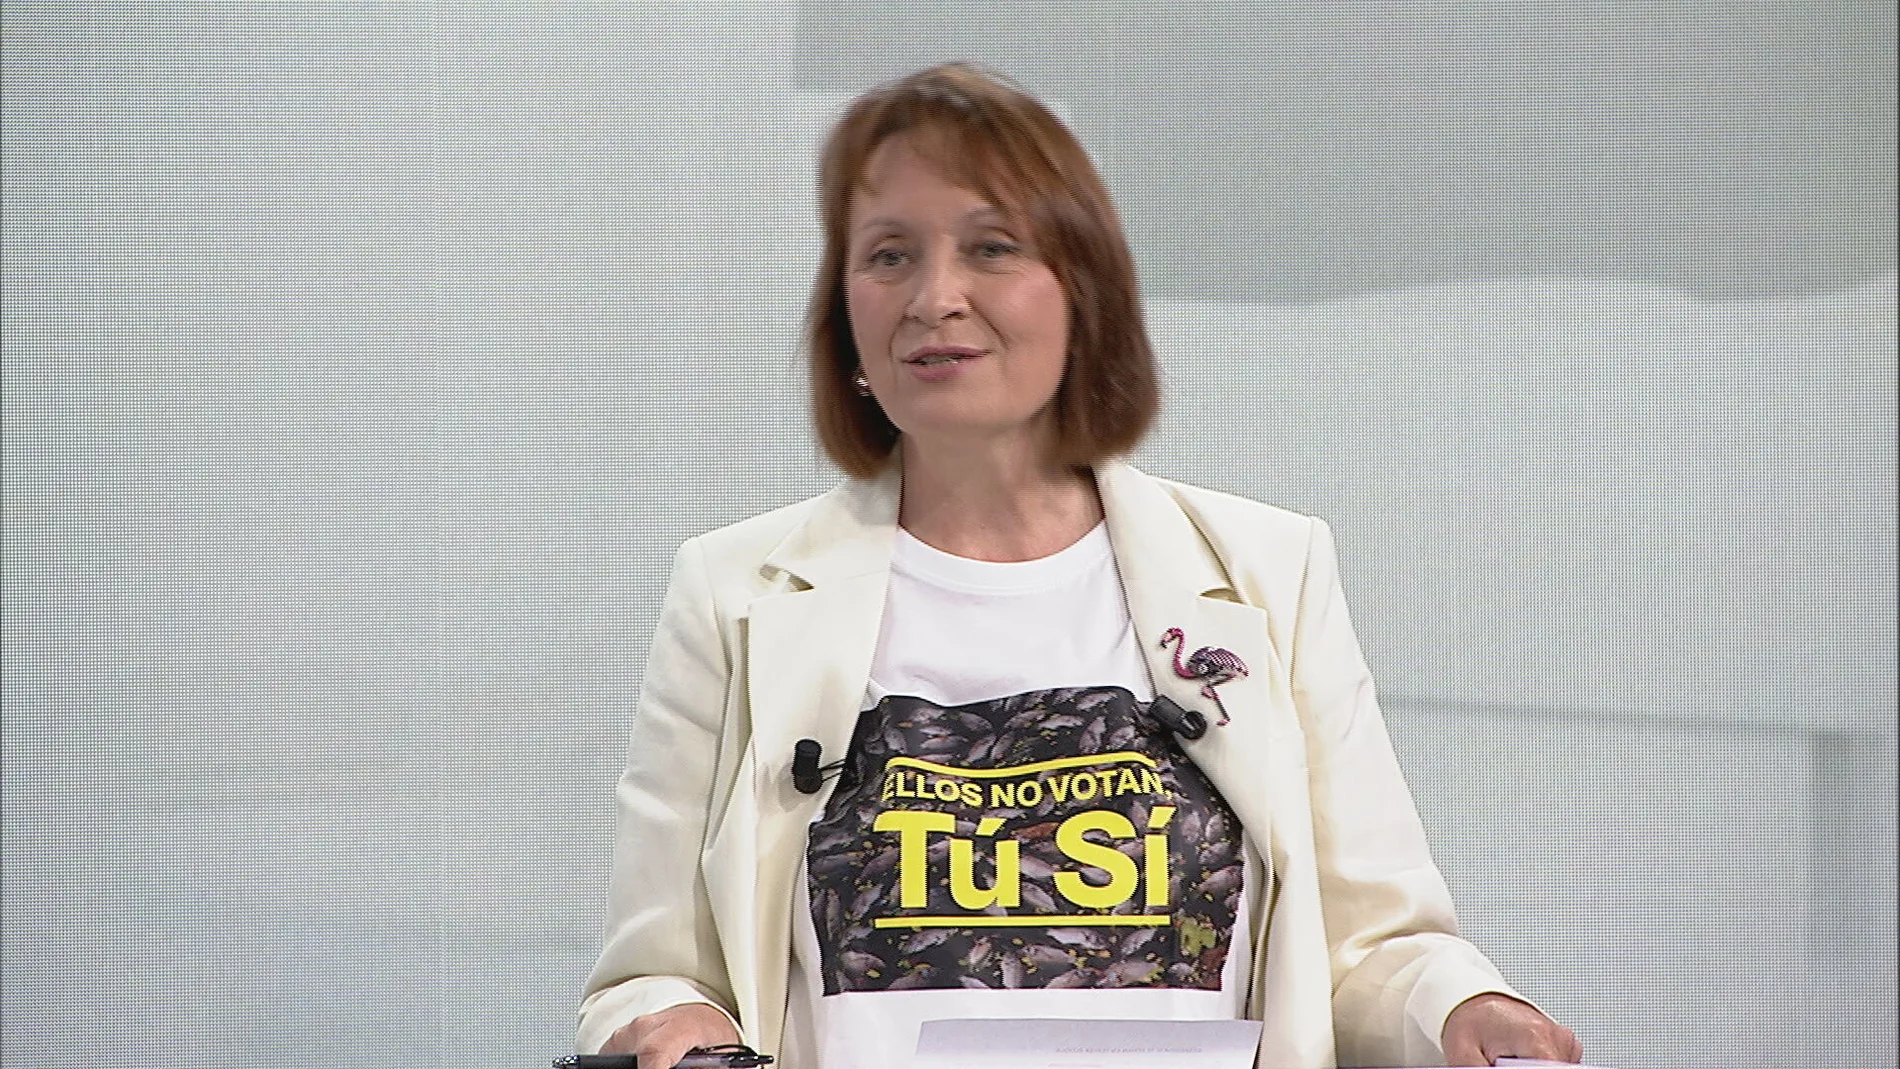 La candidata de Podemos en Murcia, María Marín